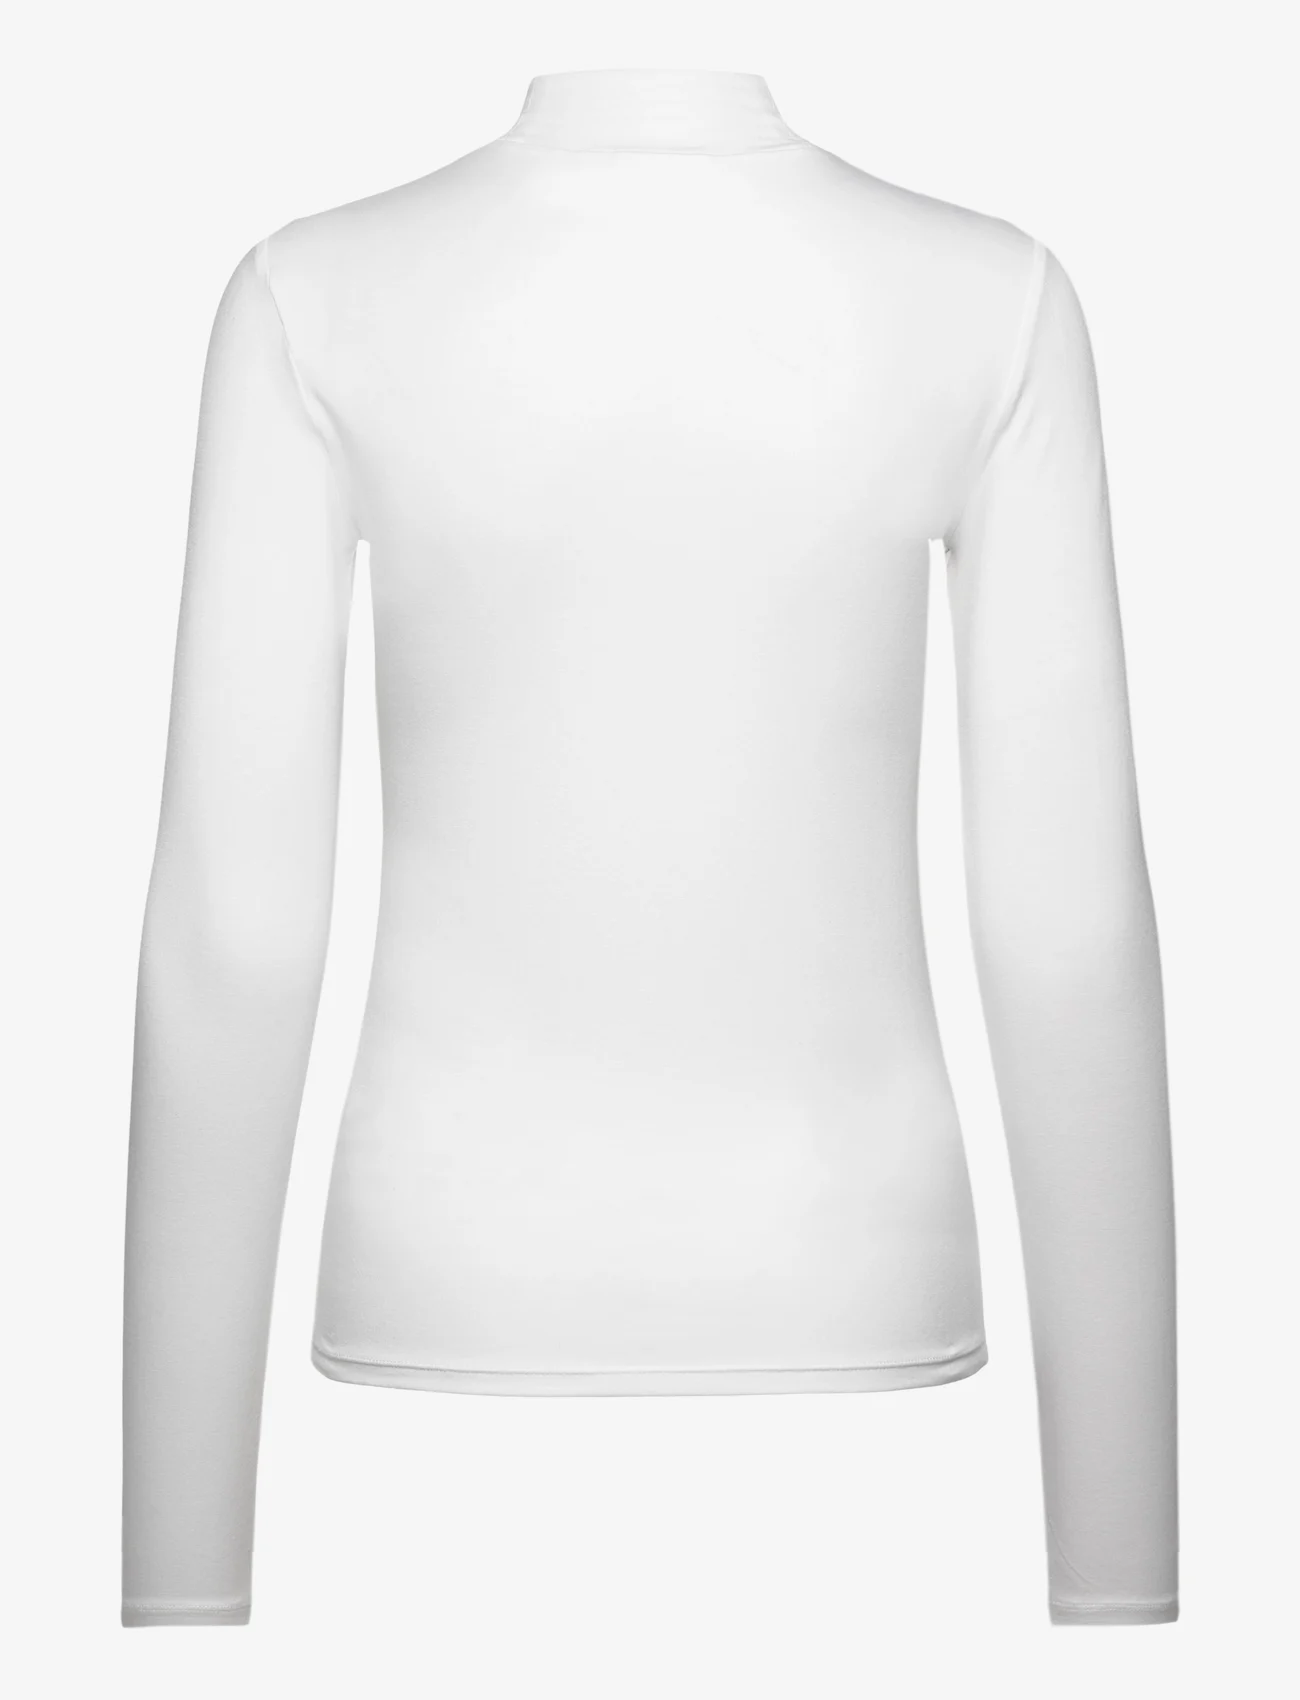 Calvin Klein - COTTON MODAL MOCK NECK LS TOP - pikkade varrukatega alussärgid - bright white - 1